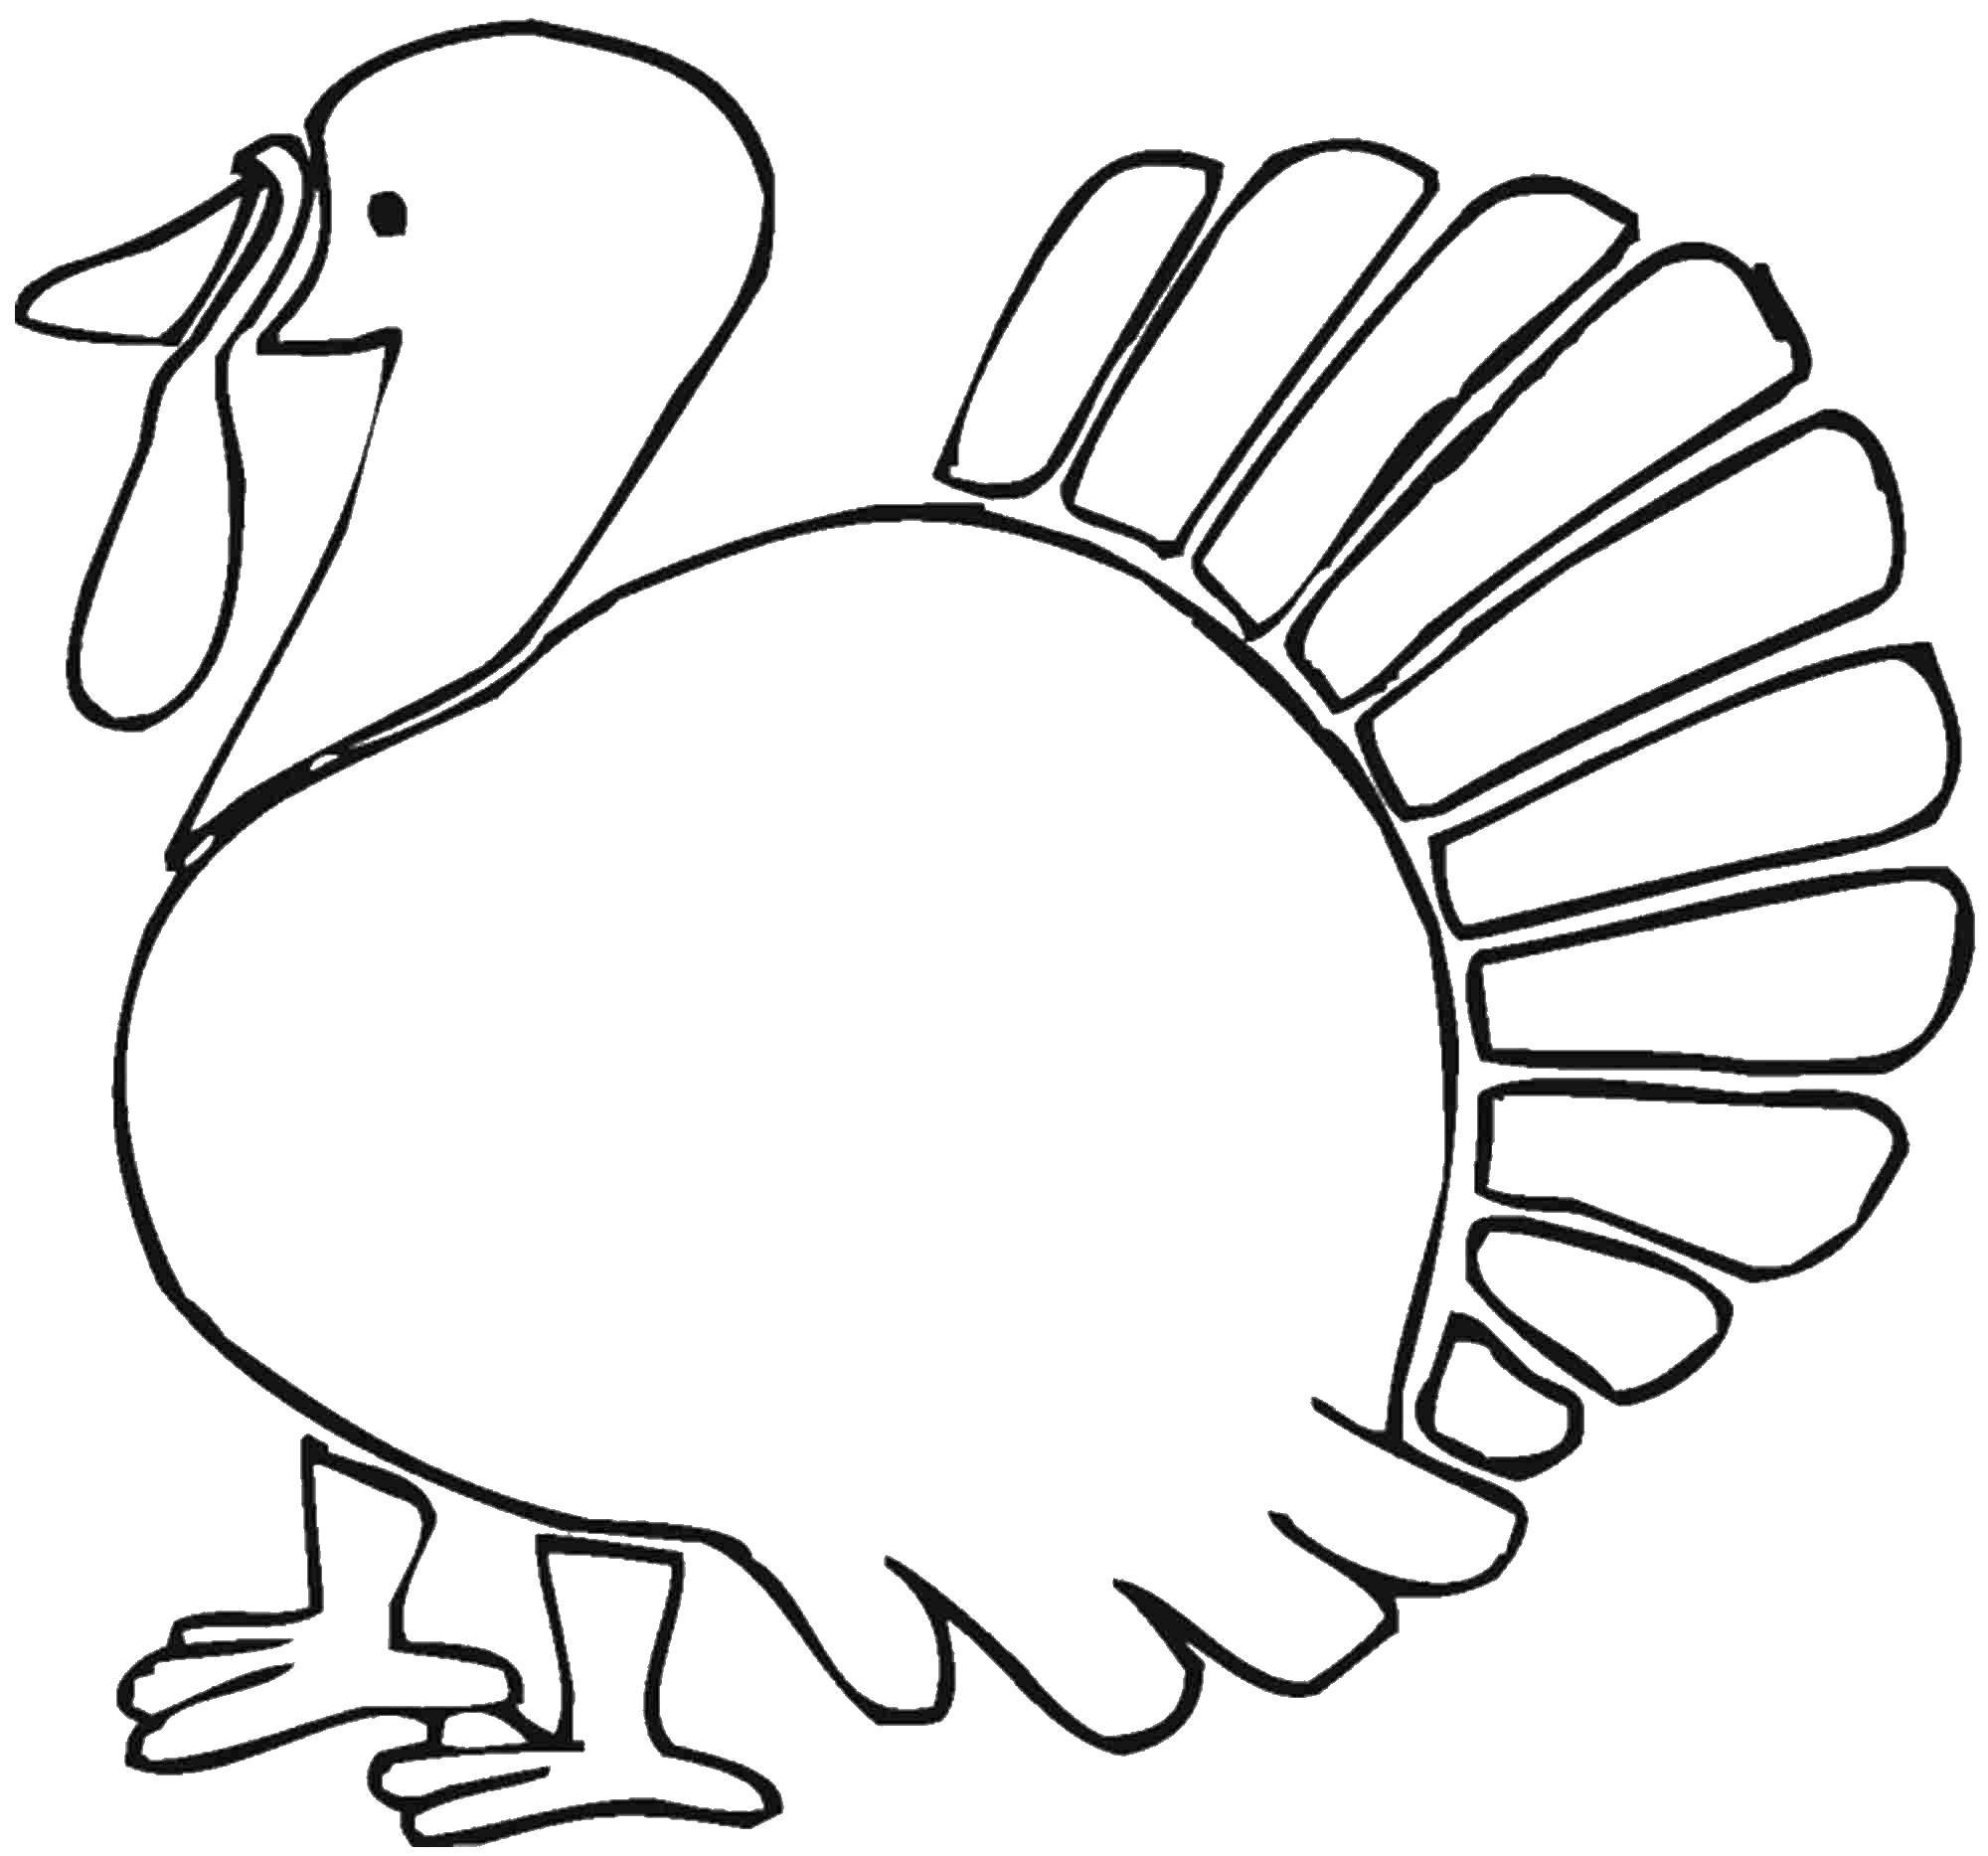 Coloring Turkey.. Category birds. Tags:  Birds.